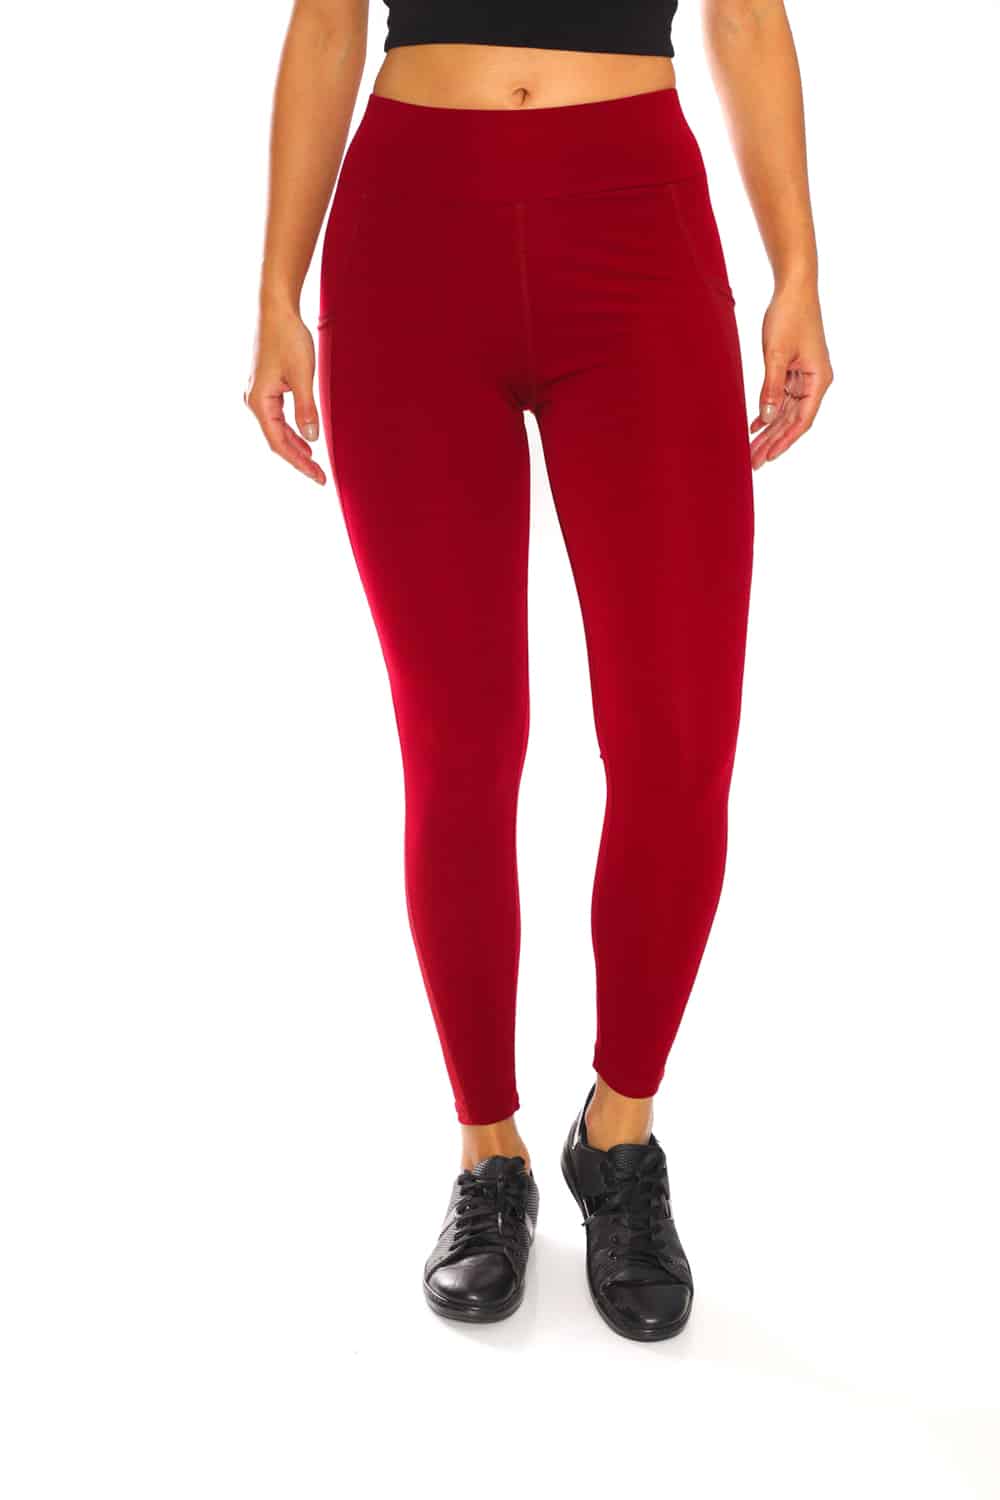 Solid Crimson Leggings for Women, 2XS 6XL, Crossover Leggings With Pockets,  High-waisted Leggings, Festive Holiday Plain Red Leggings -  Canada